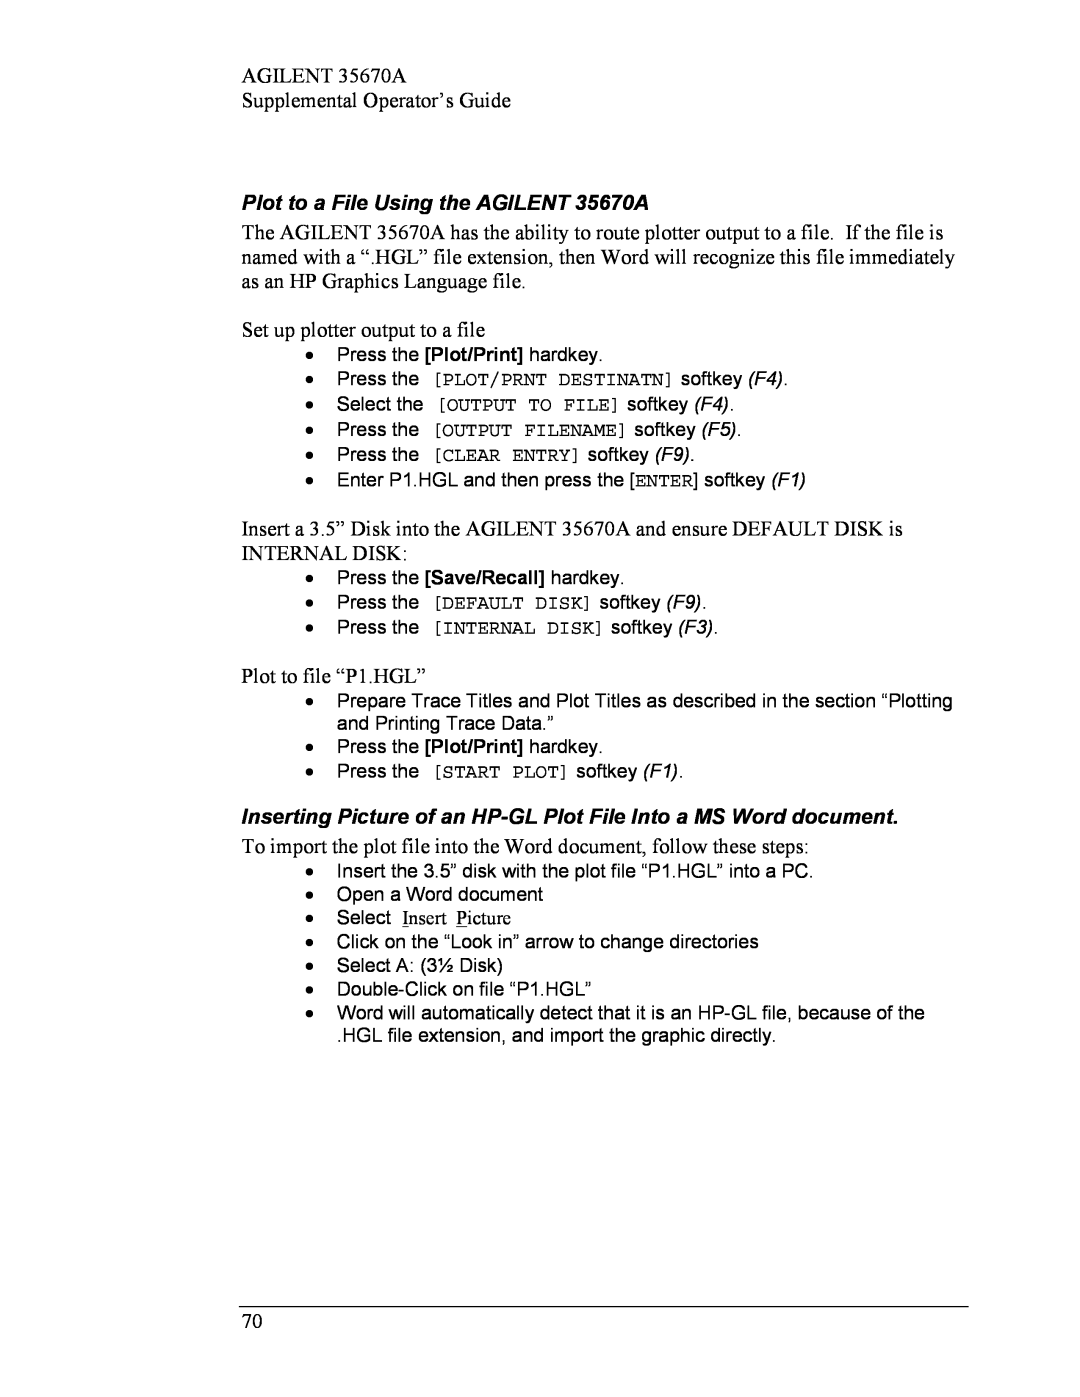 Agilent Technologies Agilent 35670A manual Plot to a File Using the AGILENT 35670A 